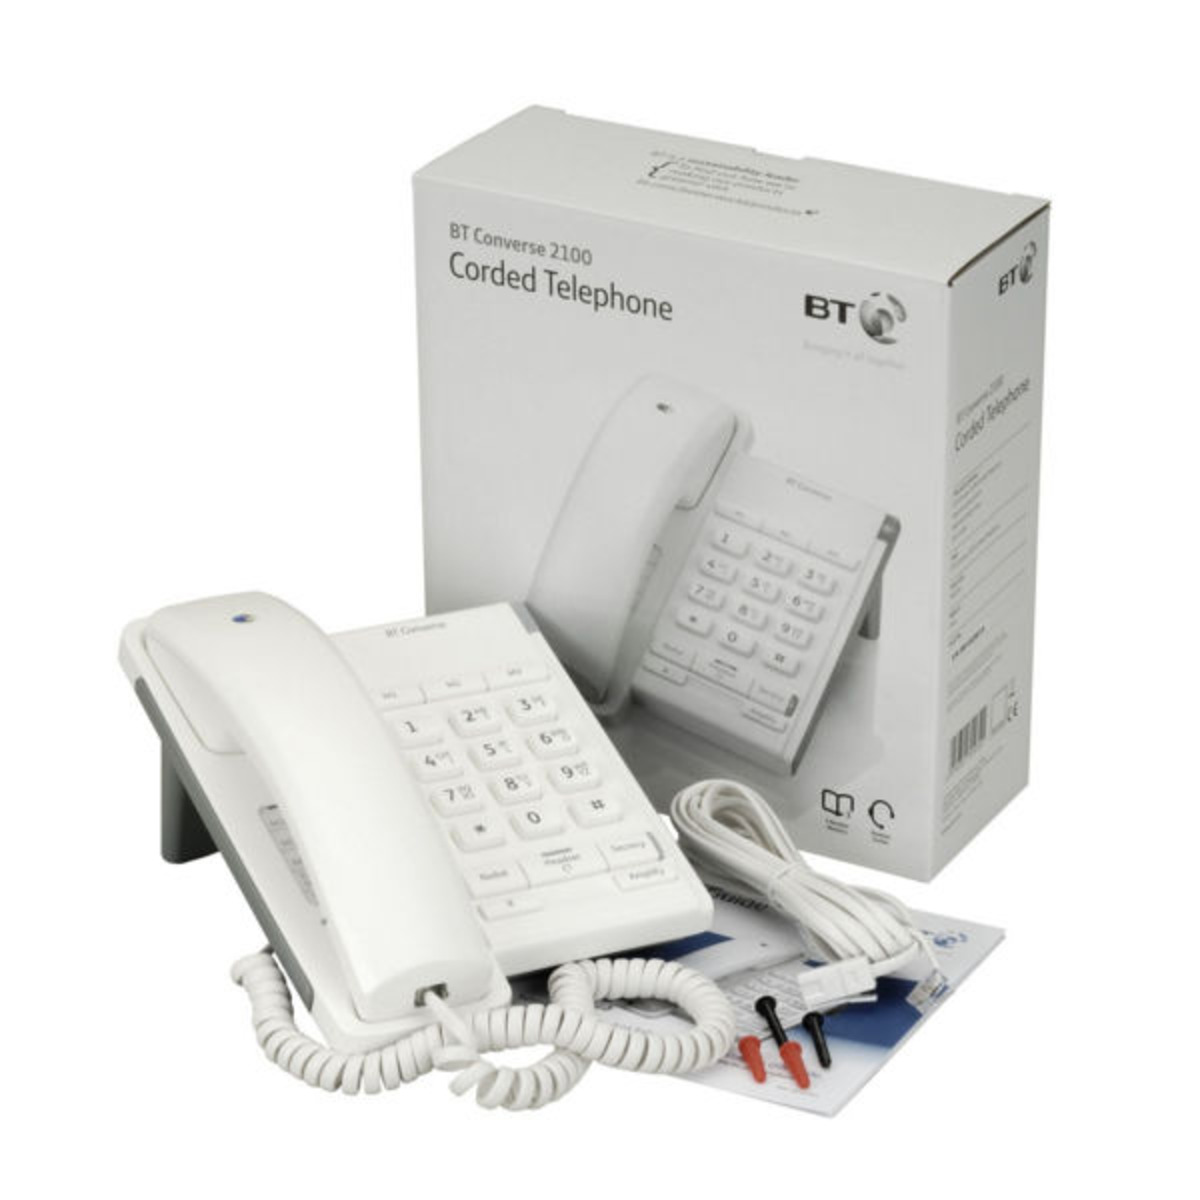 BT Converse 2100 Corded Telephone White | Supplies4Care Ltd